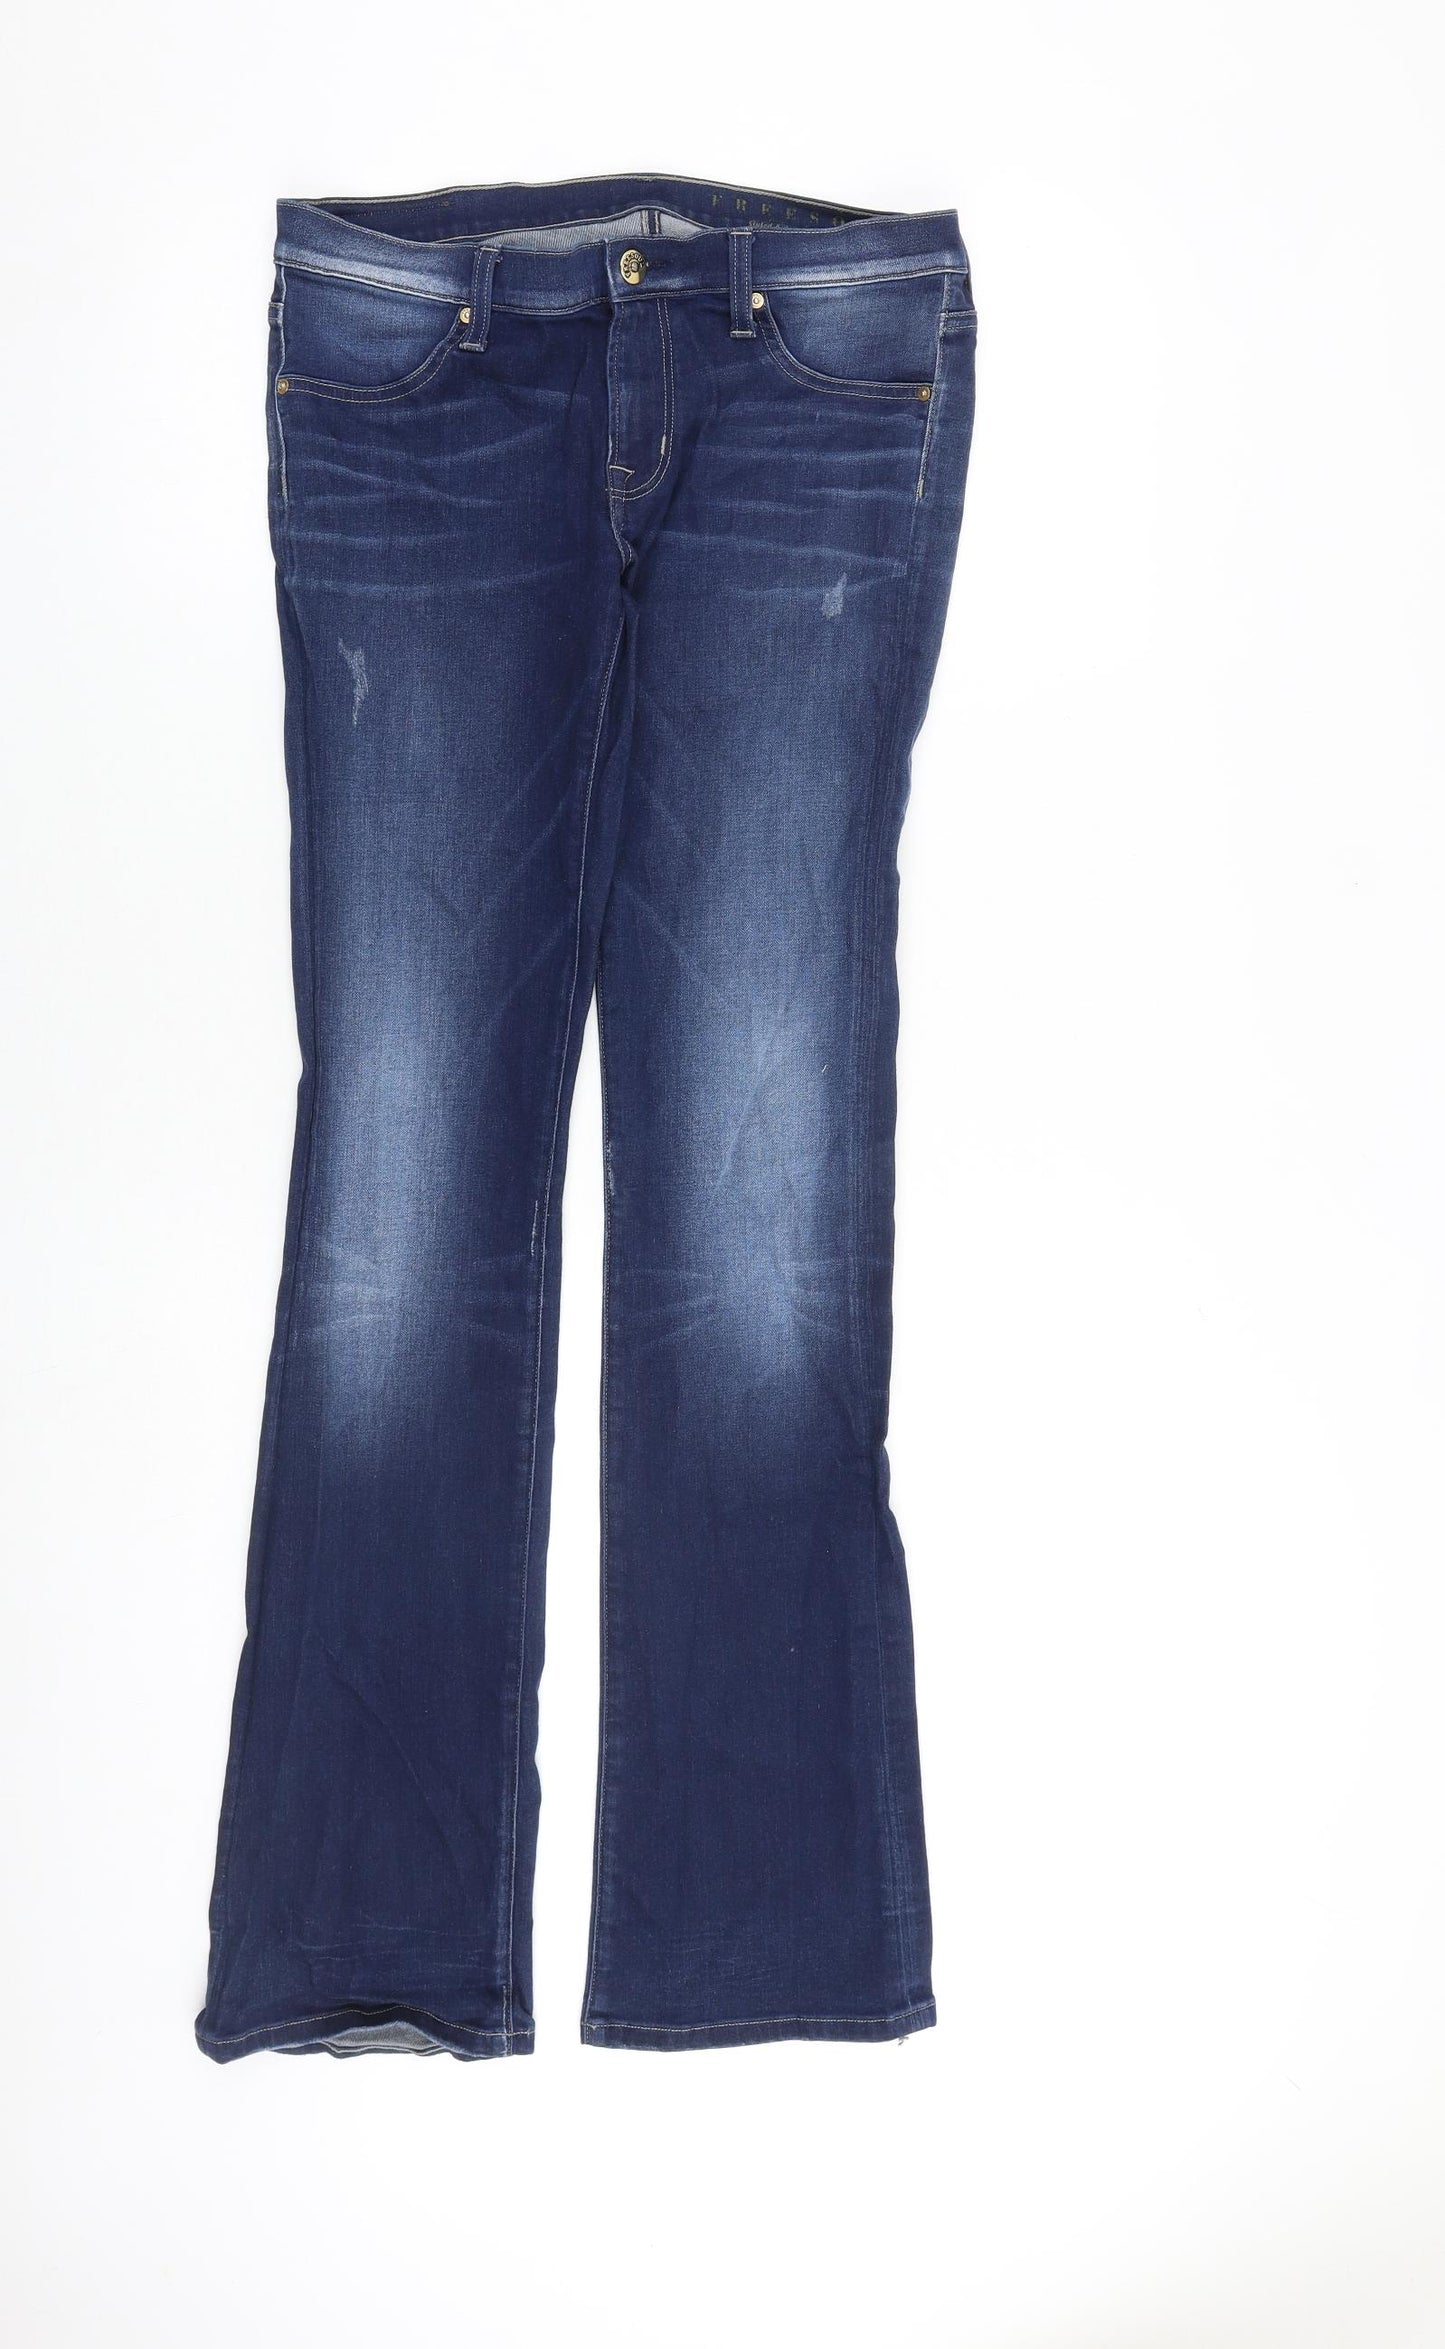 Freesoul Womens Blue Cotton Bootcut Jeans Size 32 in L34 in Regular Zip